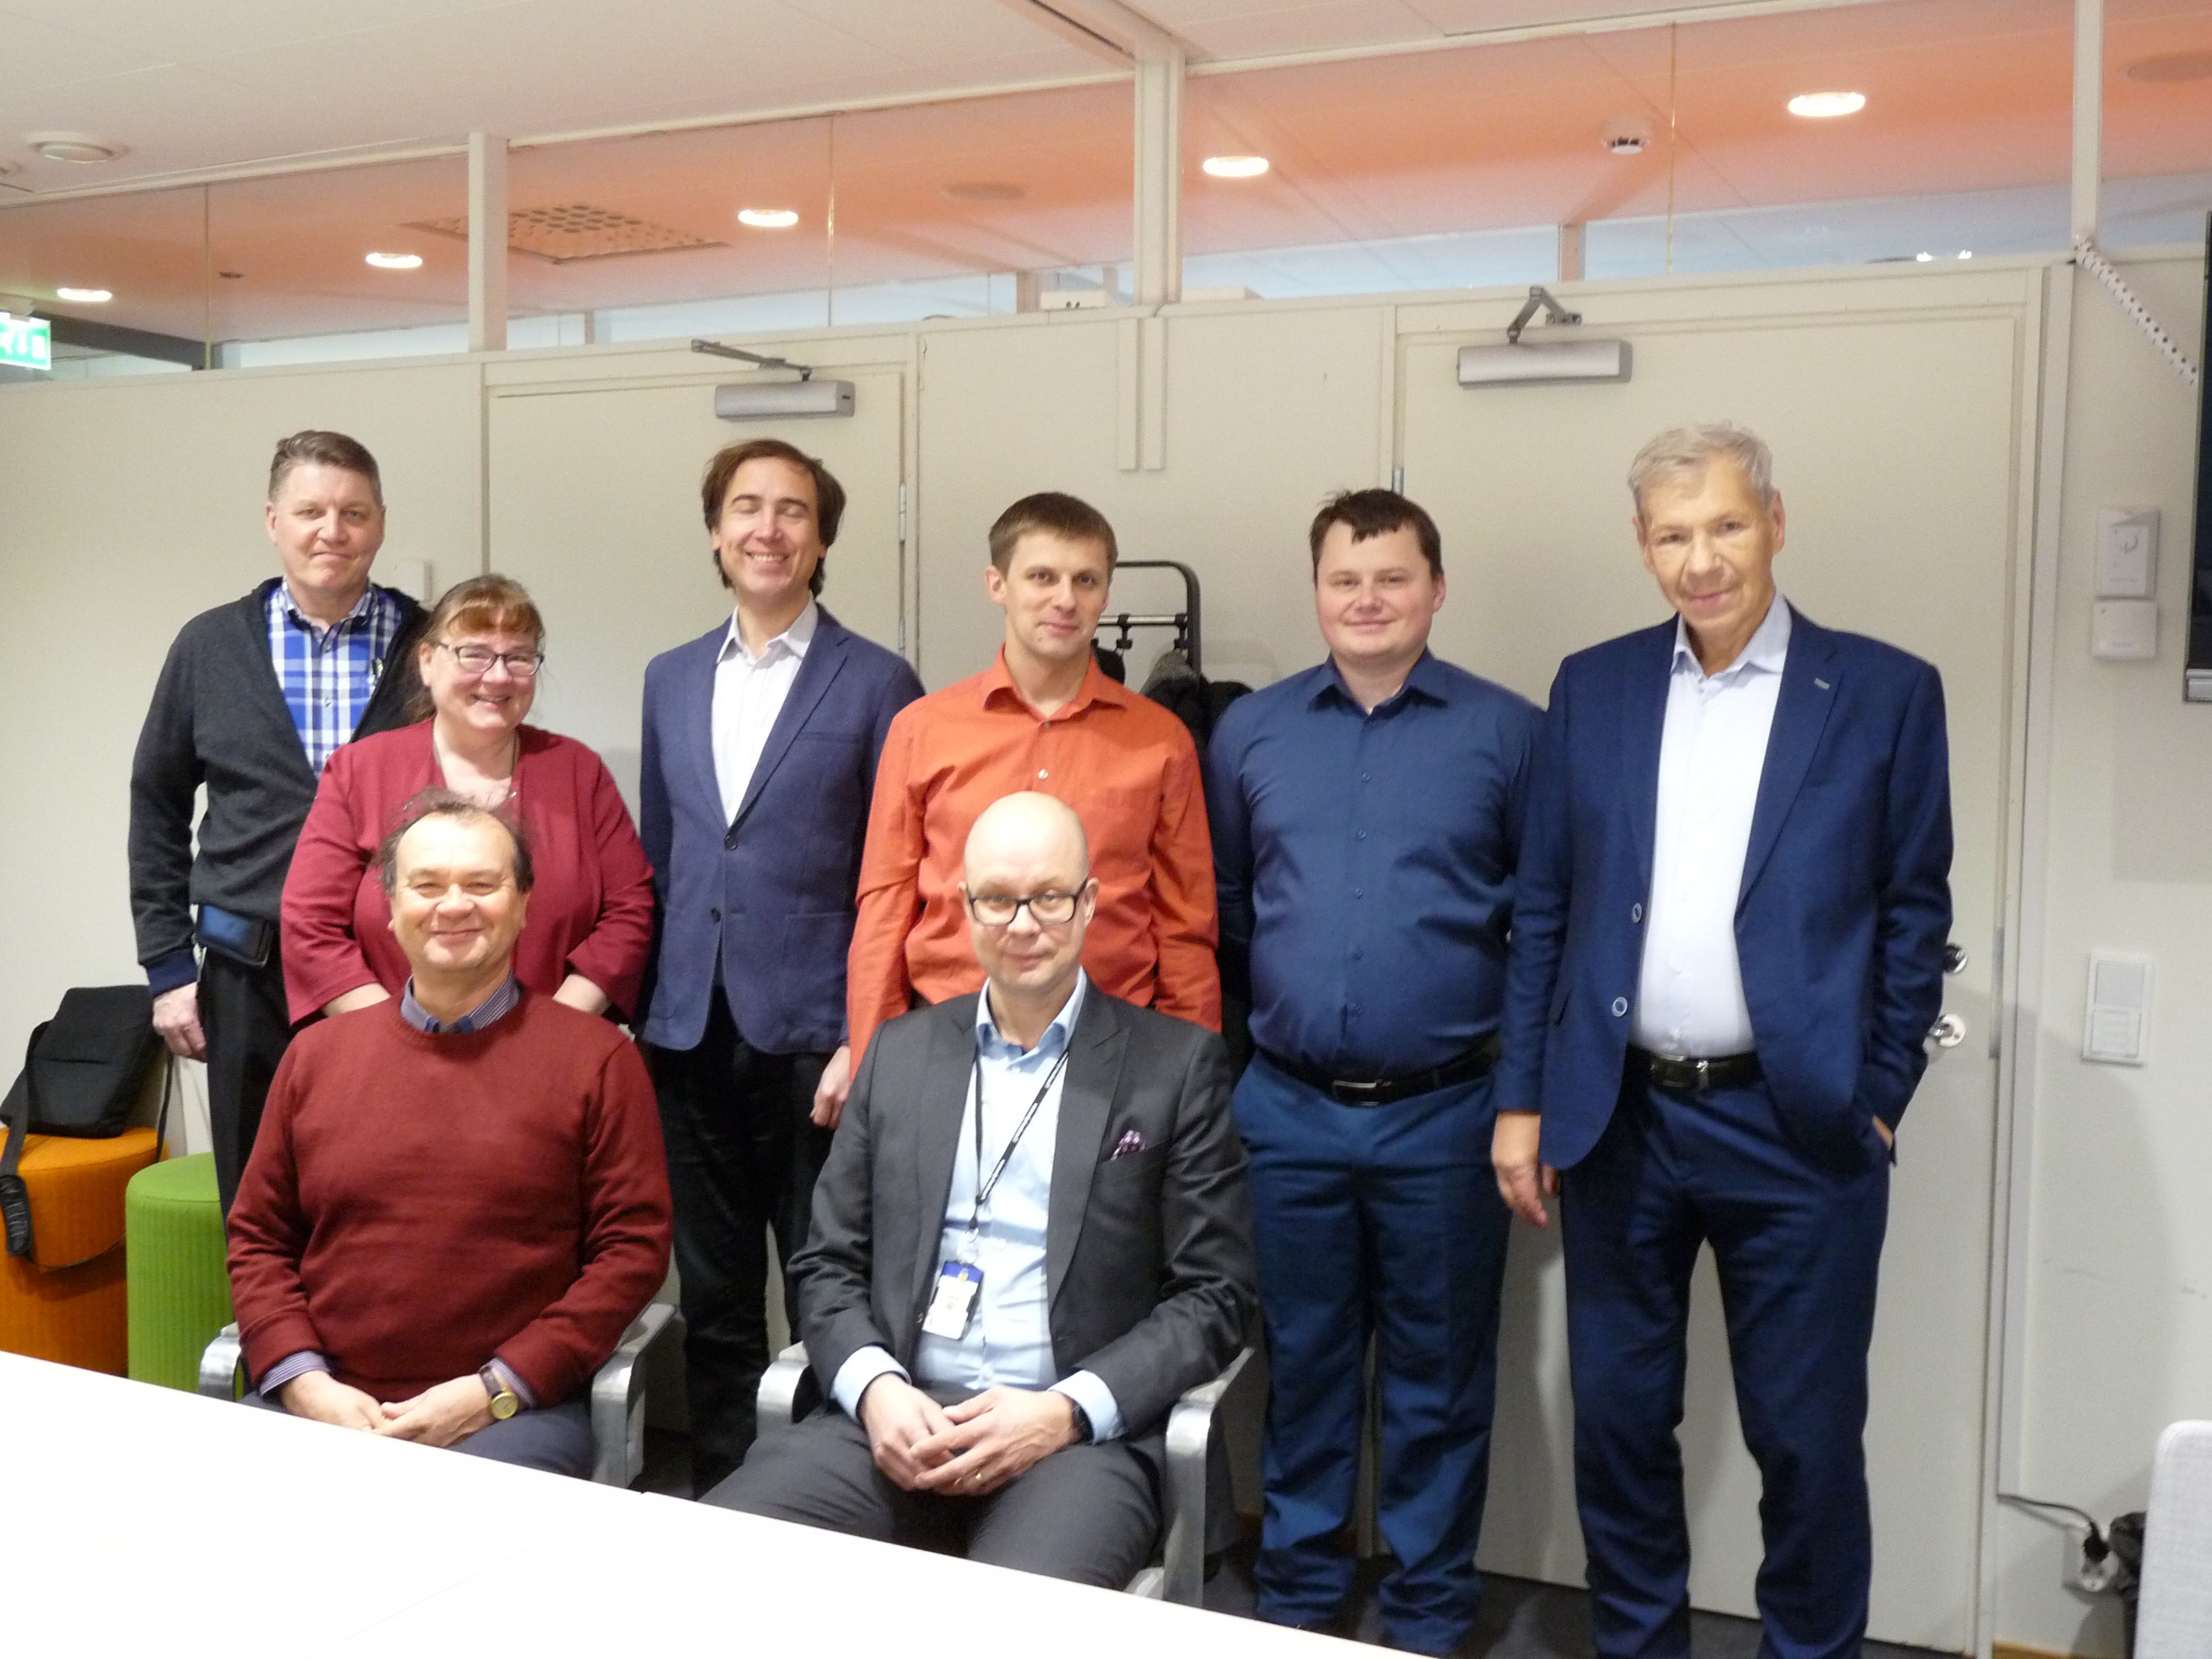 Final meeting in Kuopio